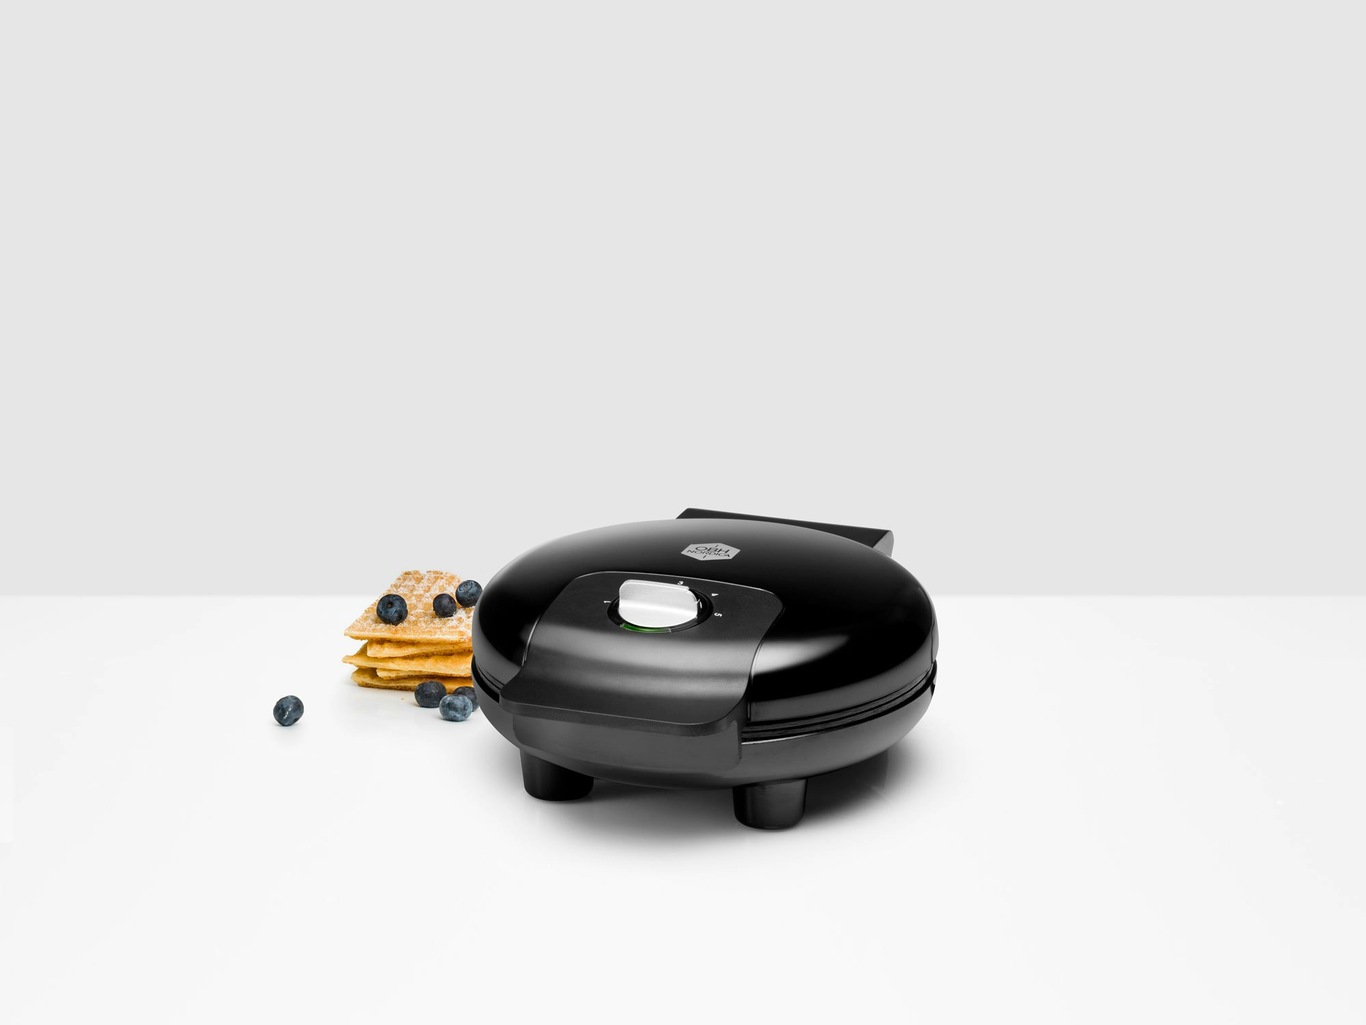 https://royaldesign.com/image/11/obh-nordica-select-waffle-iron-3?w=800&quality=80